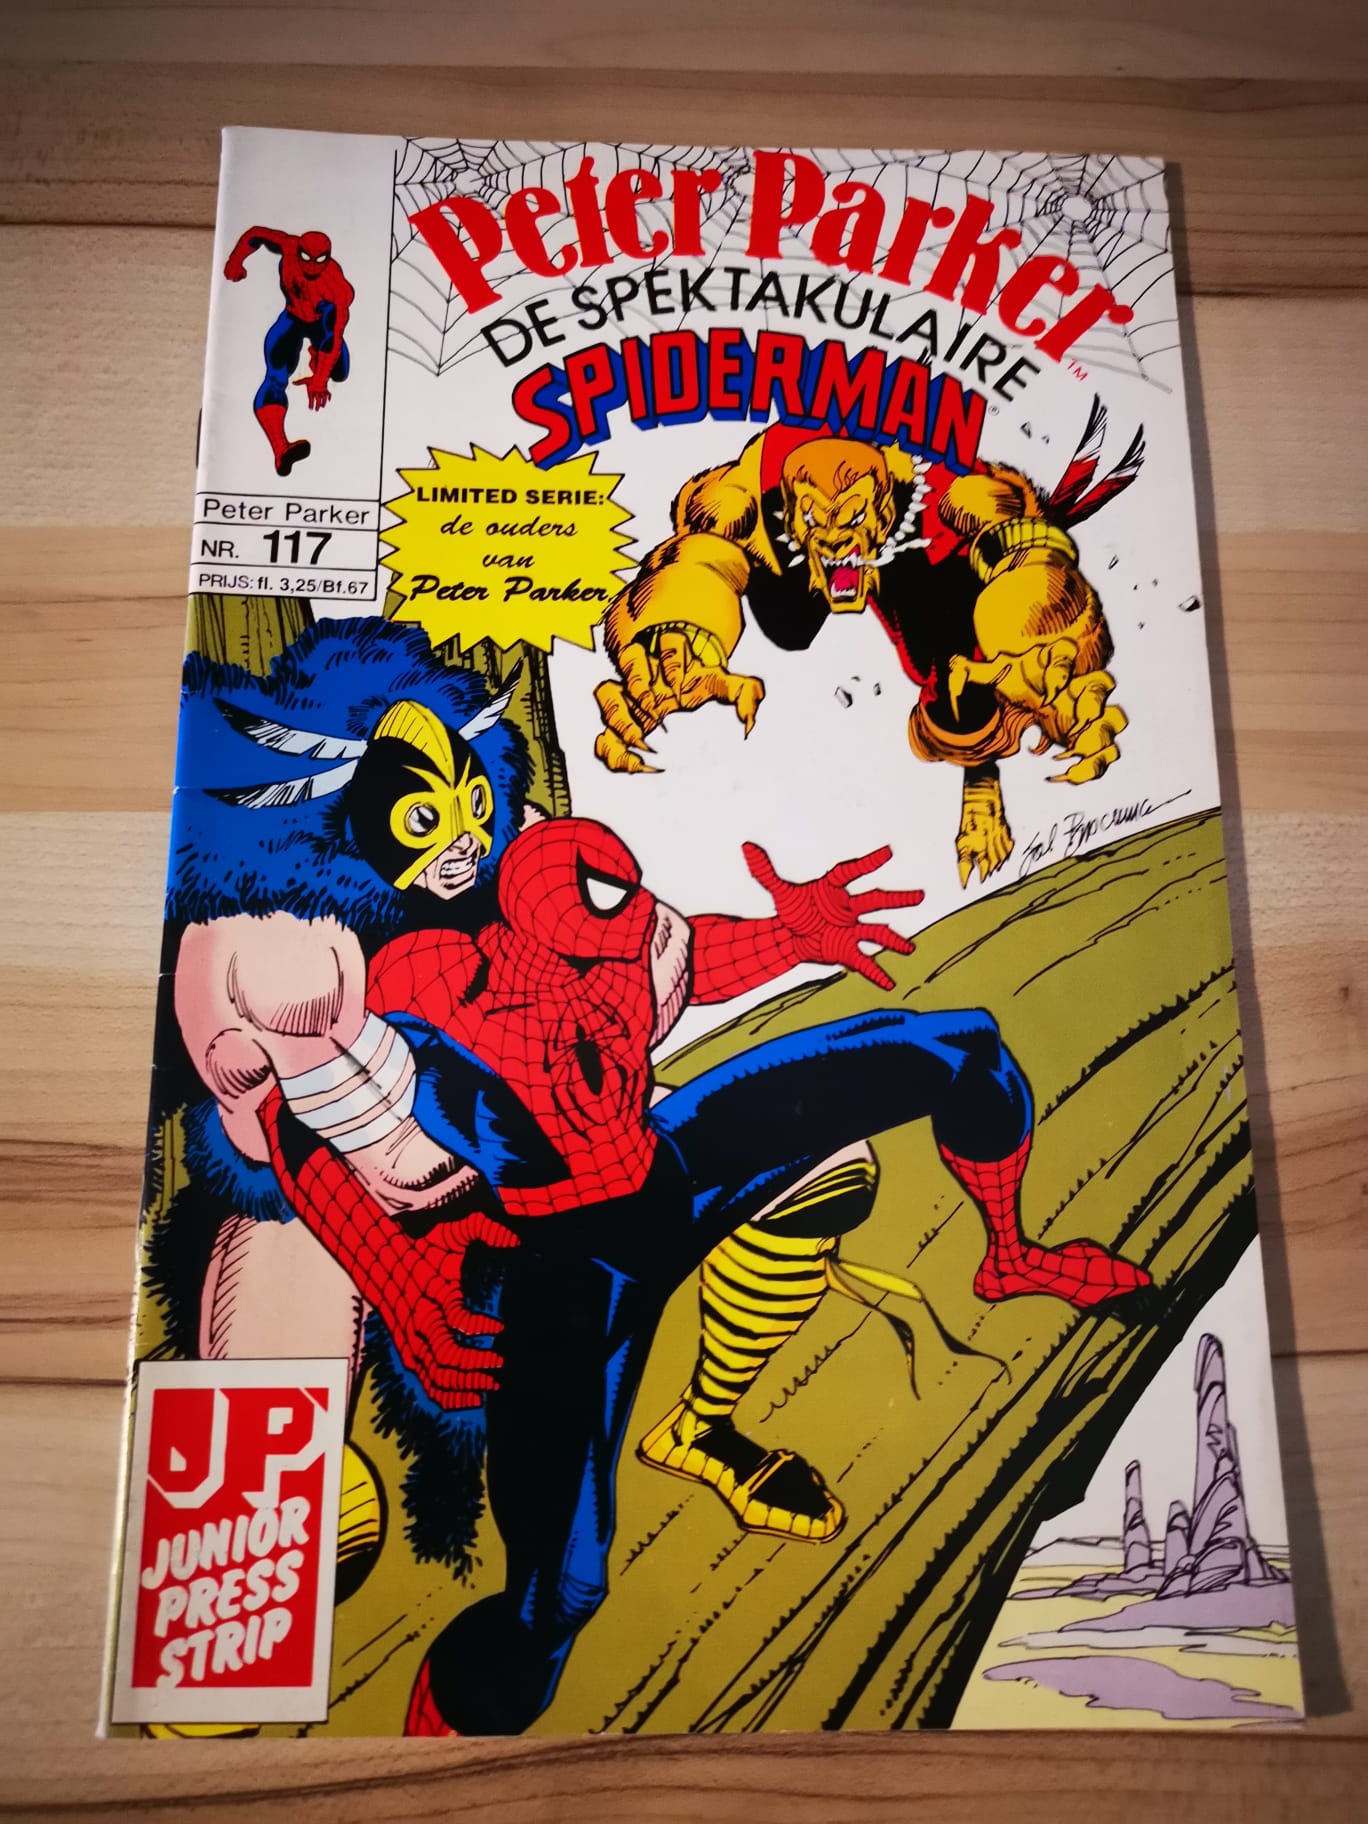 Peter Parker De spektakulaire spiderman #117